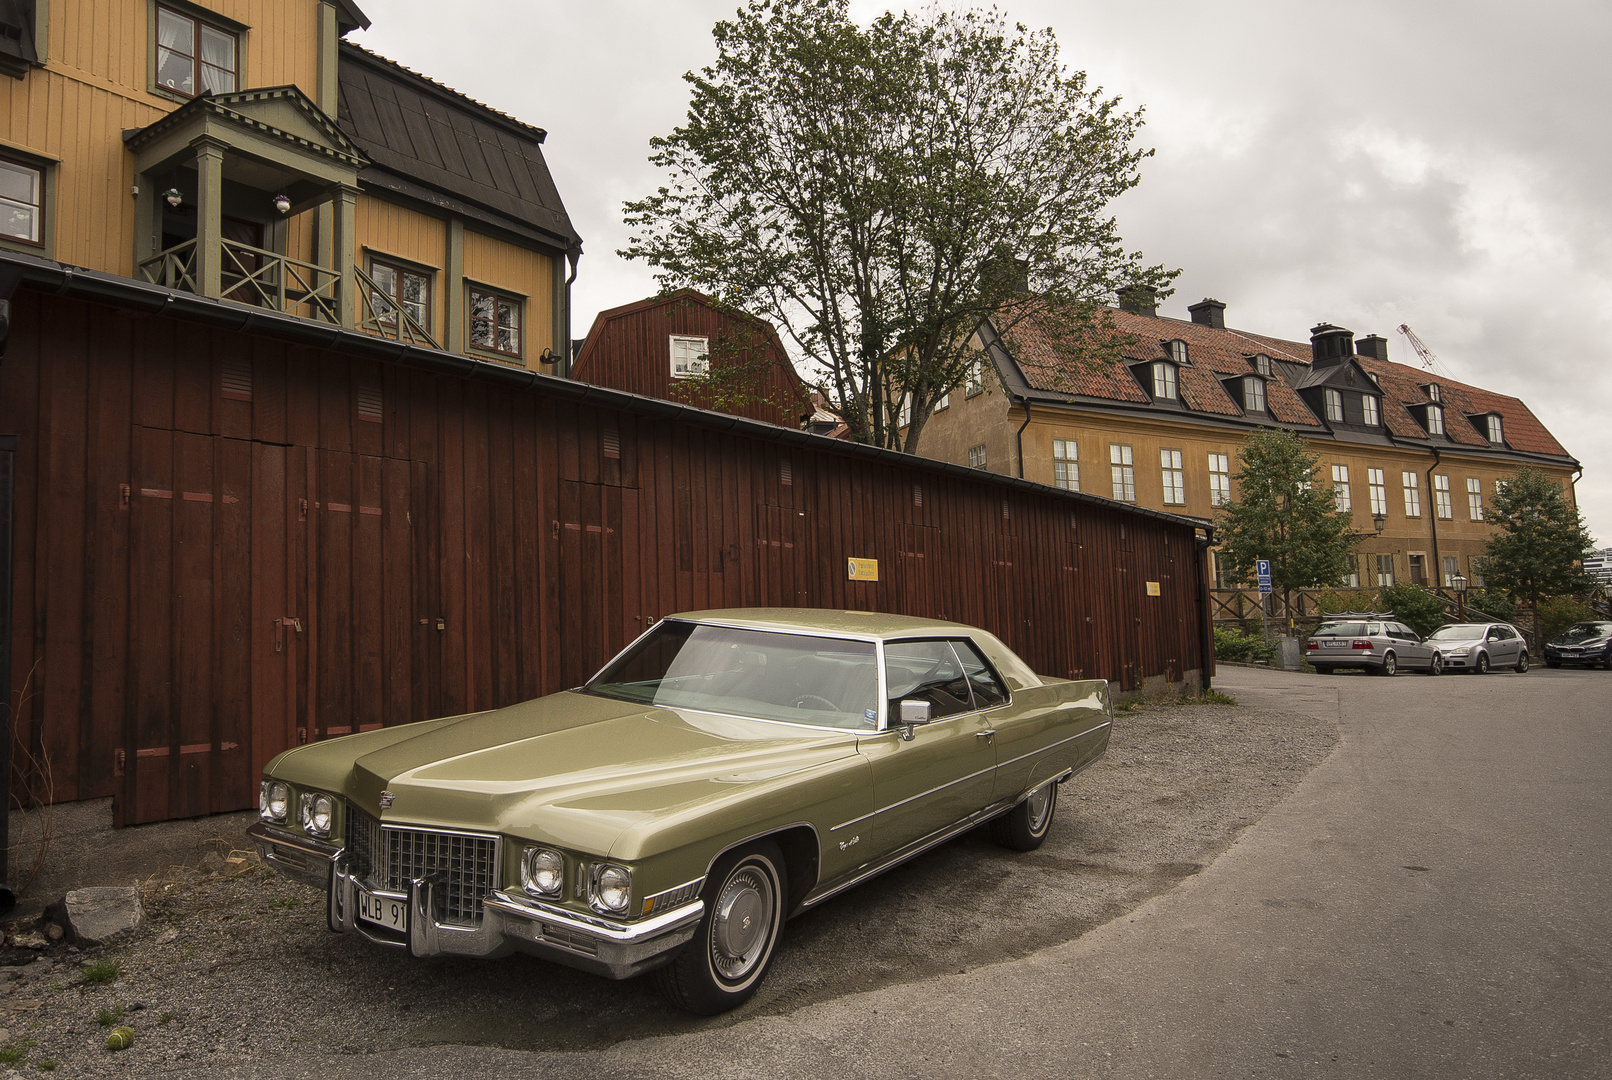 Stockholm - Djurgarden - Abandoned Street Behind Gröna Lund